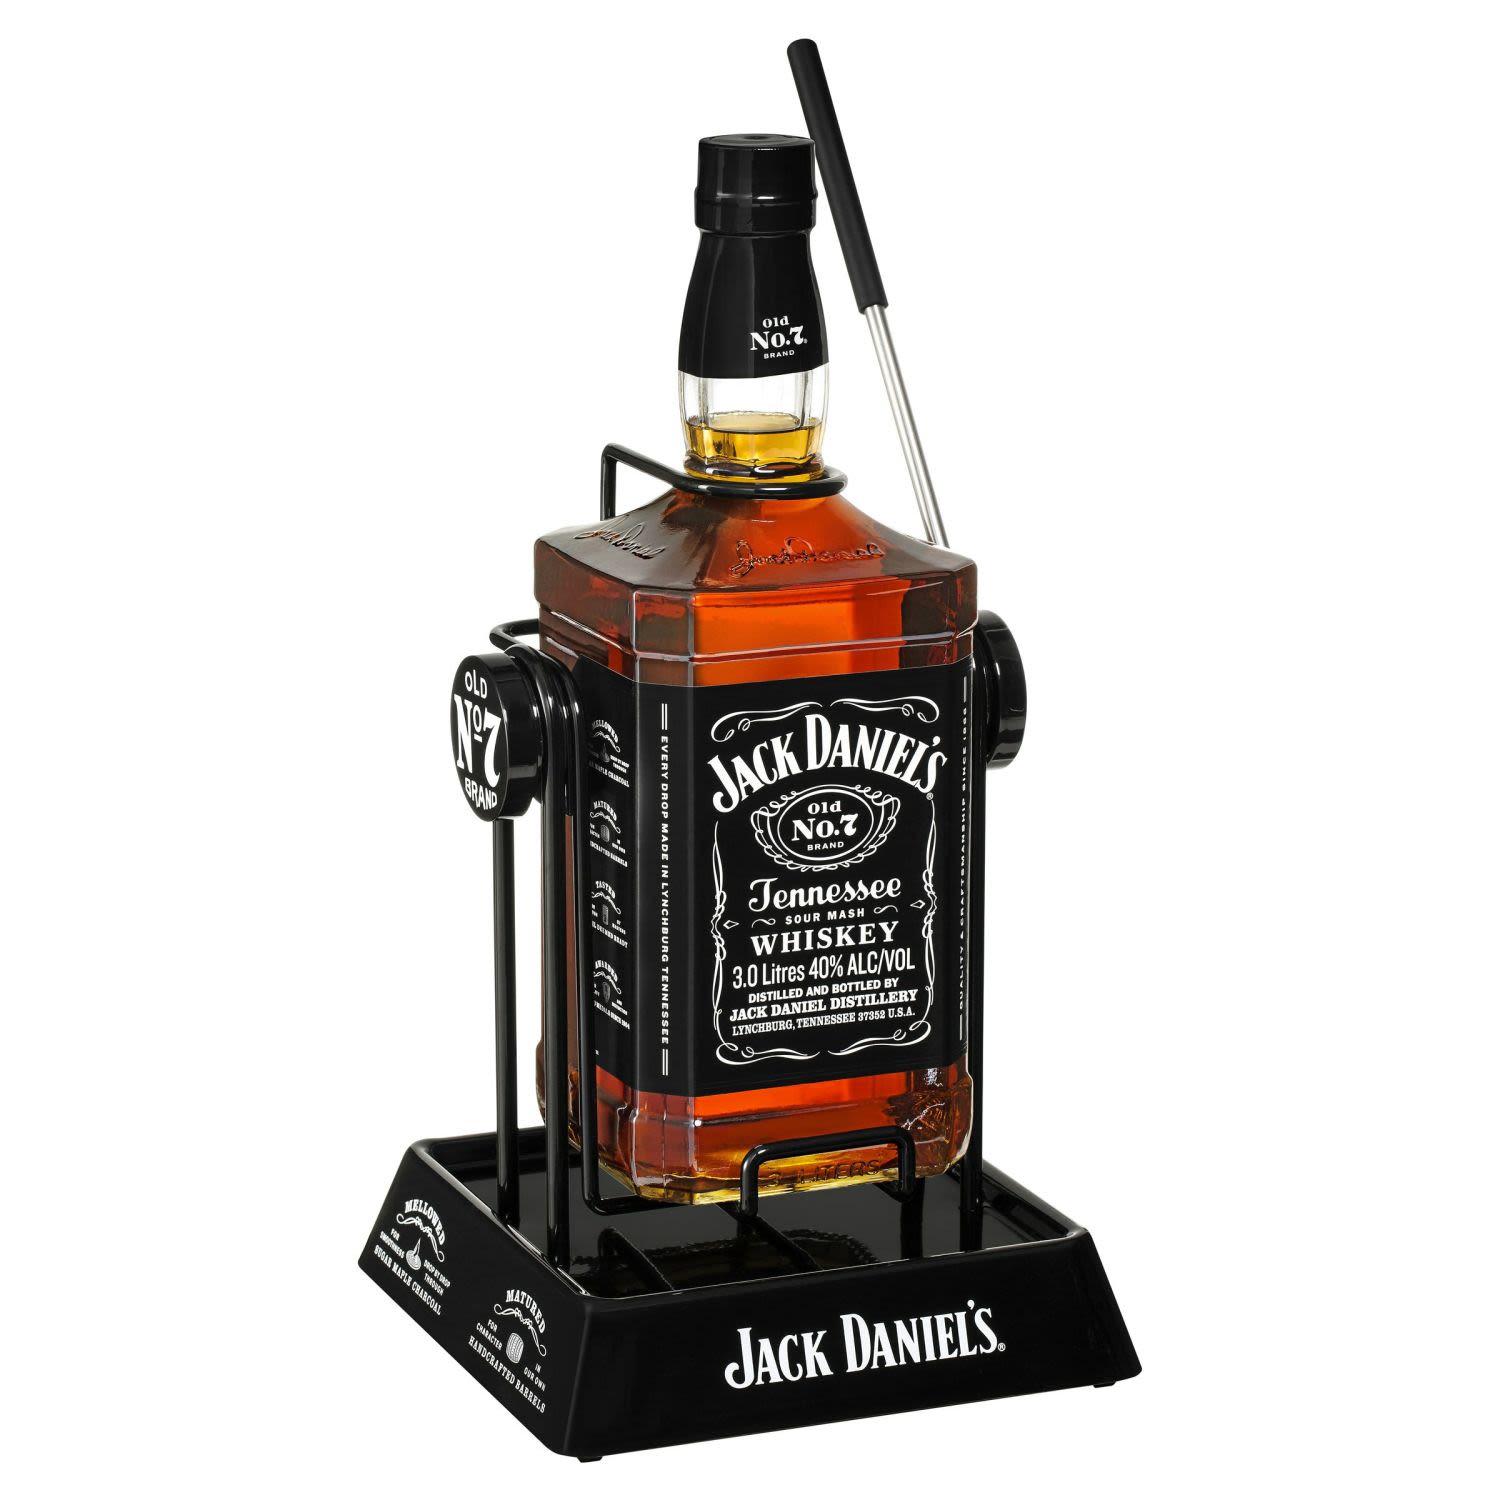 Jack Daniel's Old No. 7 Tennessee Whiskey + Cradle 3L Bottle